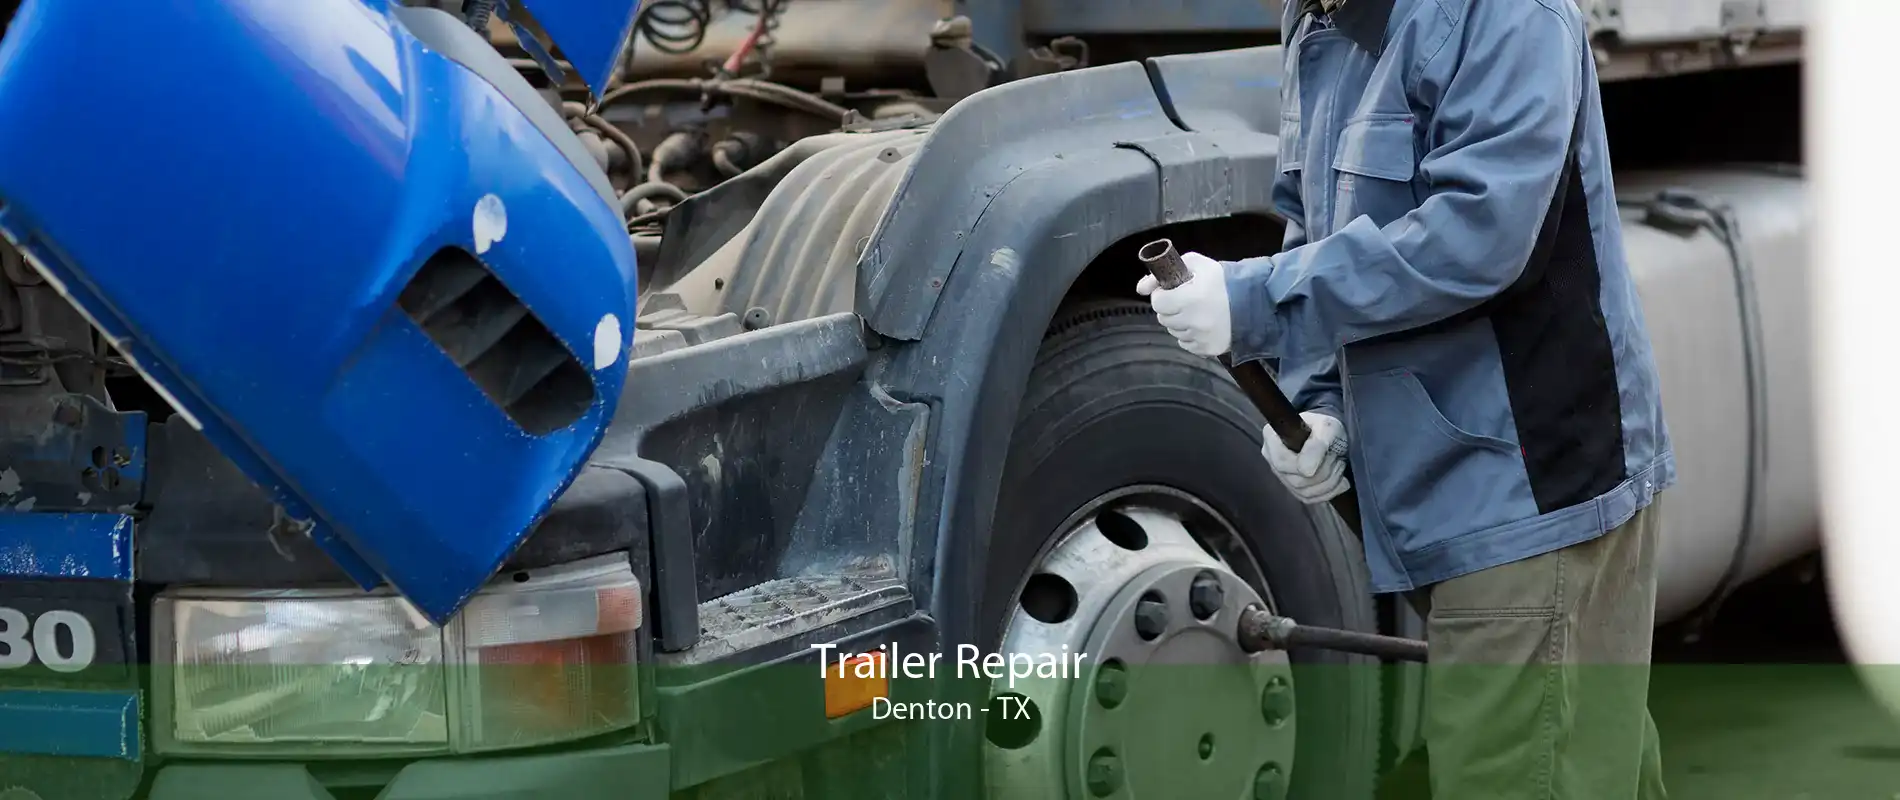 Trailer Repair Denton - TX